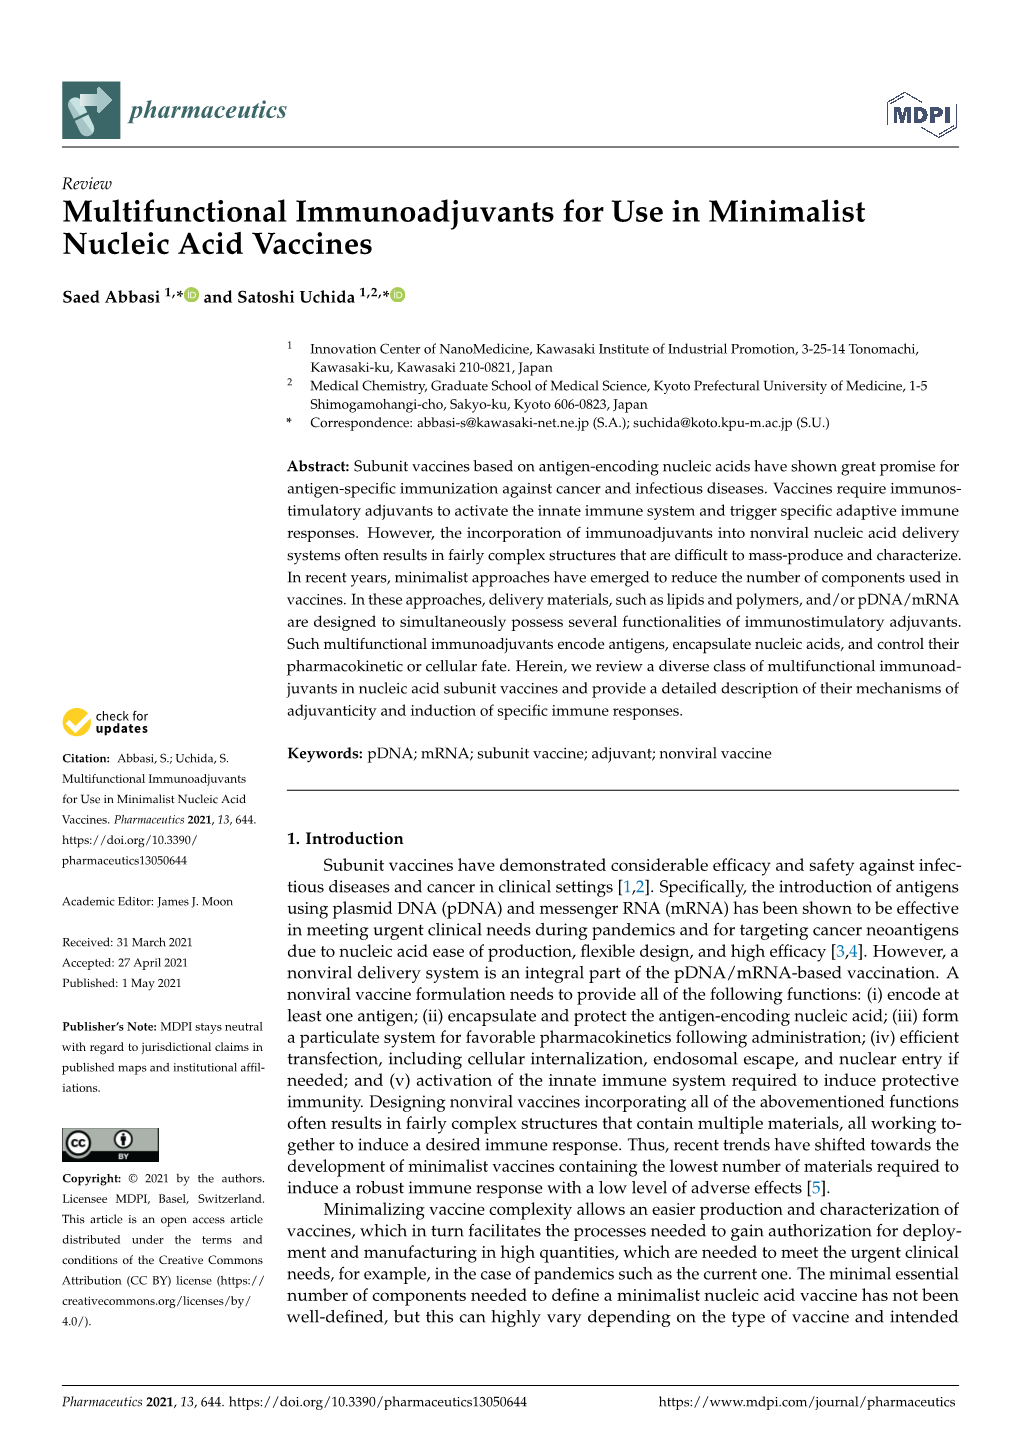 Multifunctional Immunoadjuvants for Use in Minimalist Nucleic Acid Vaccines